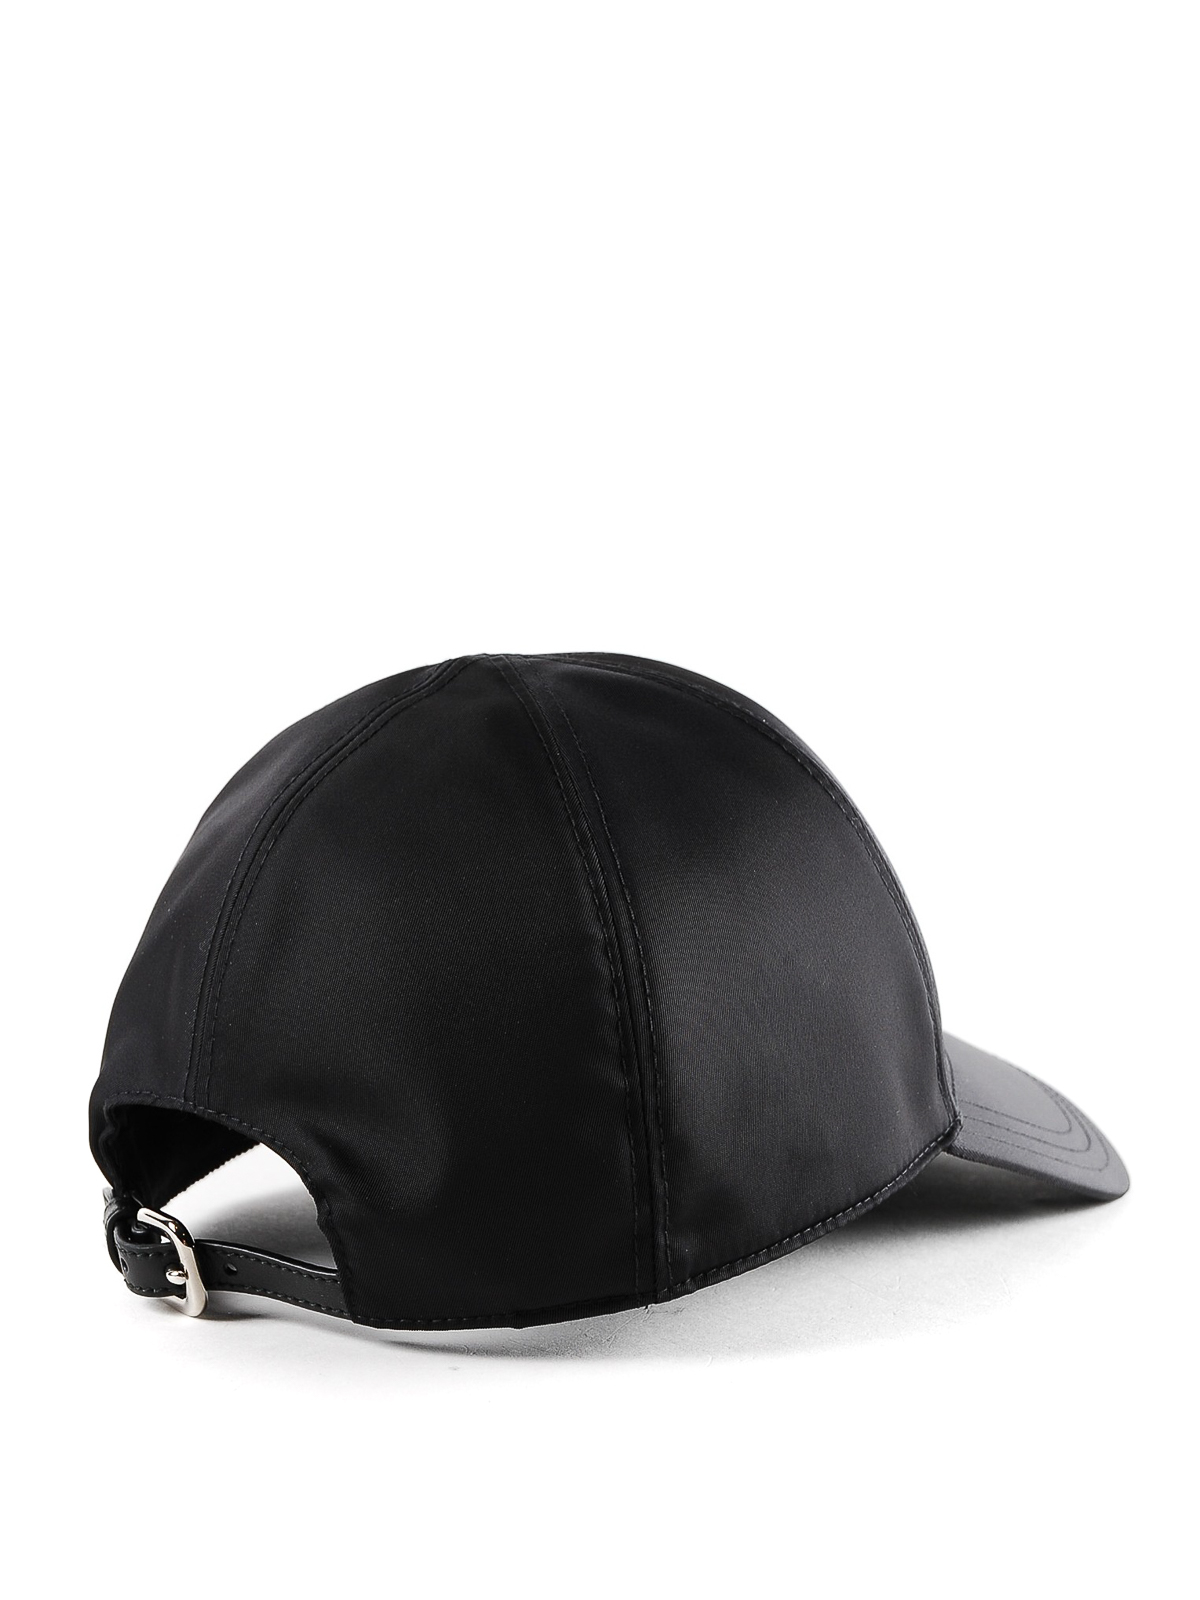 Hats & caps Prada - Black nylon baseball cap - 2HC274820002 